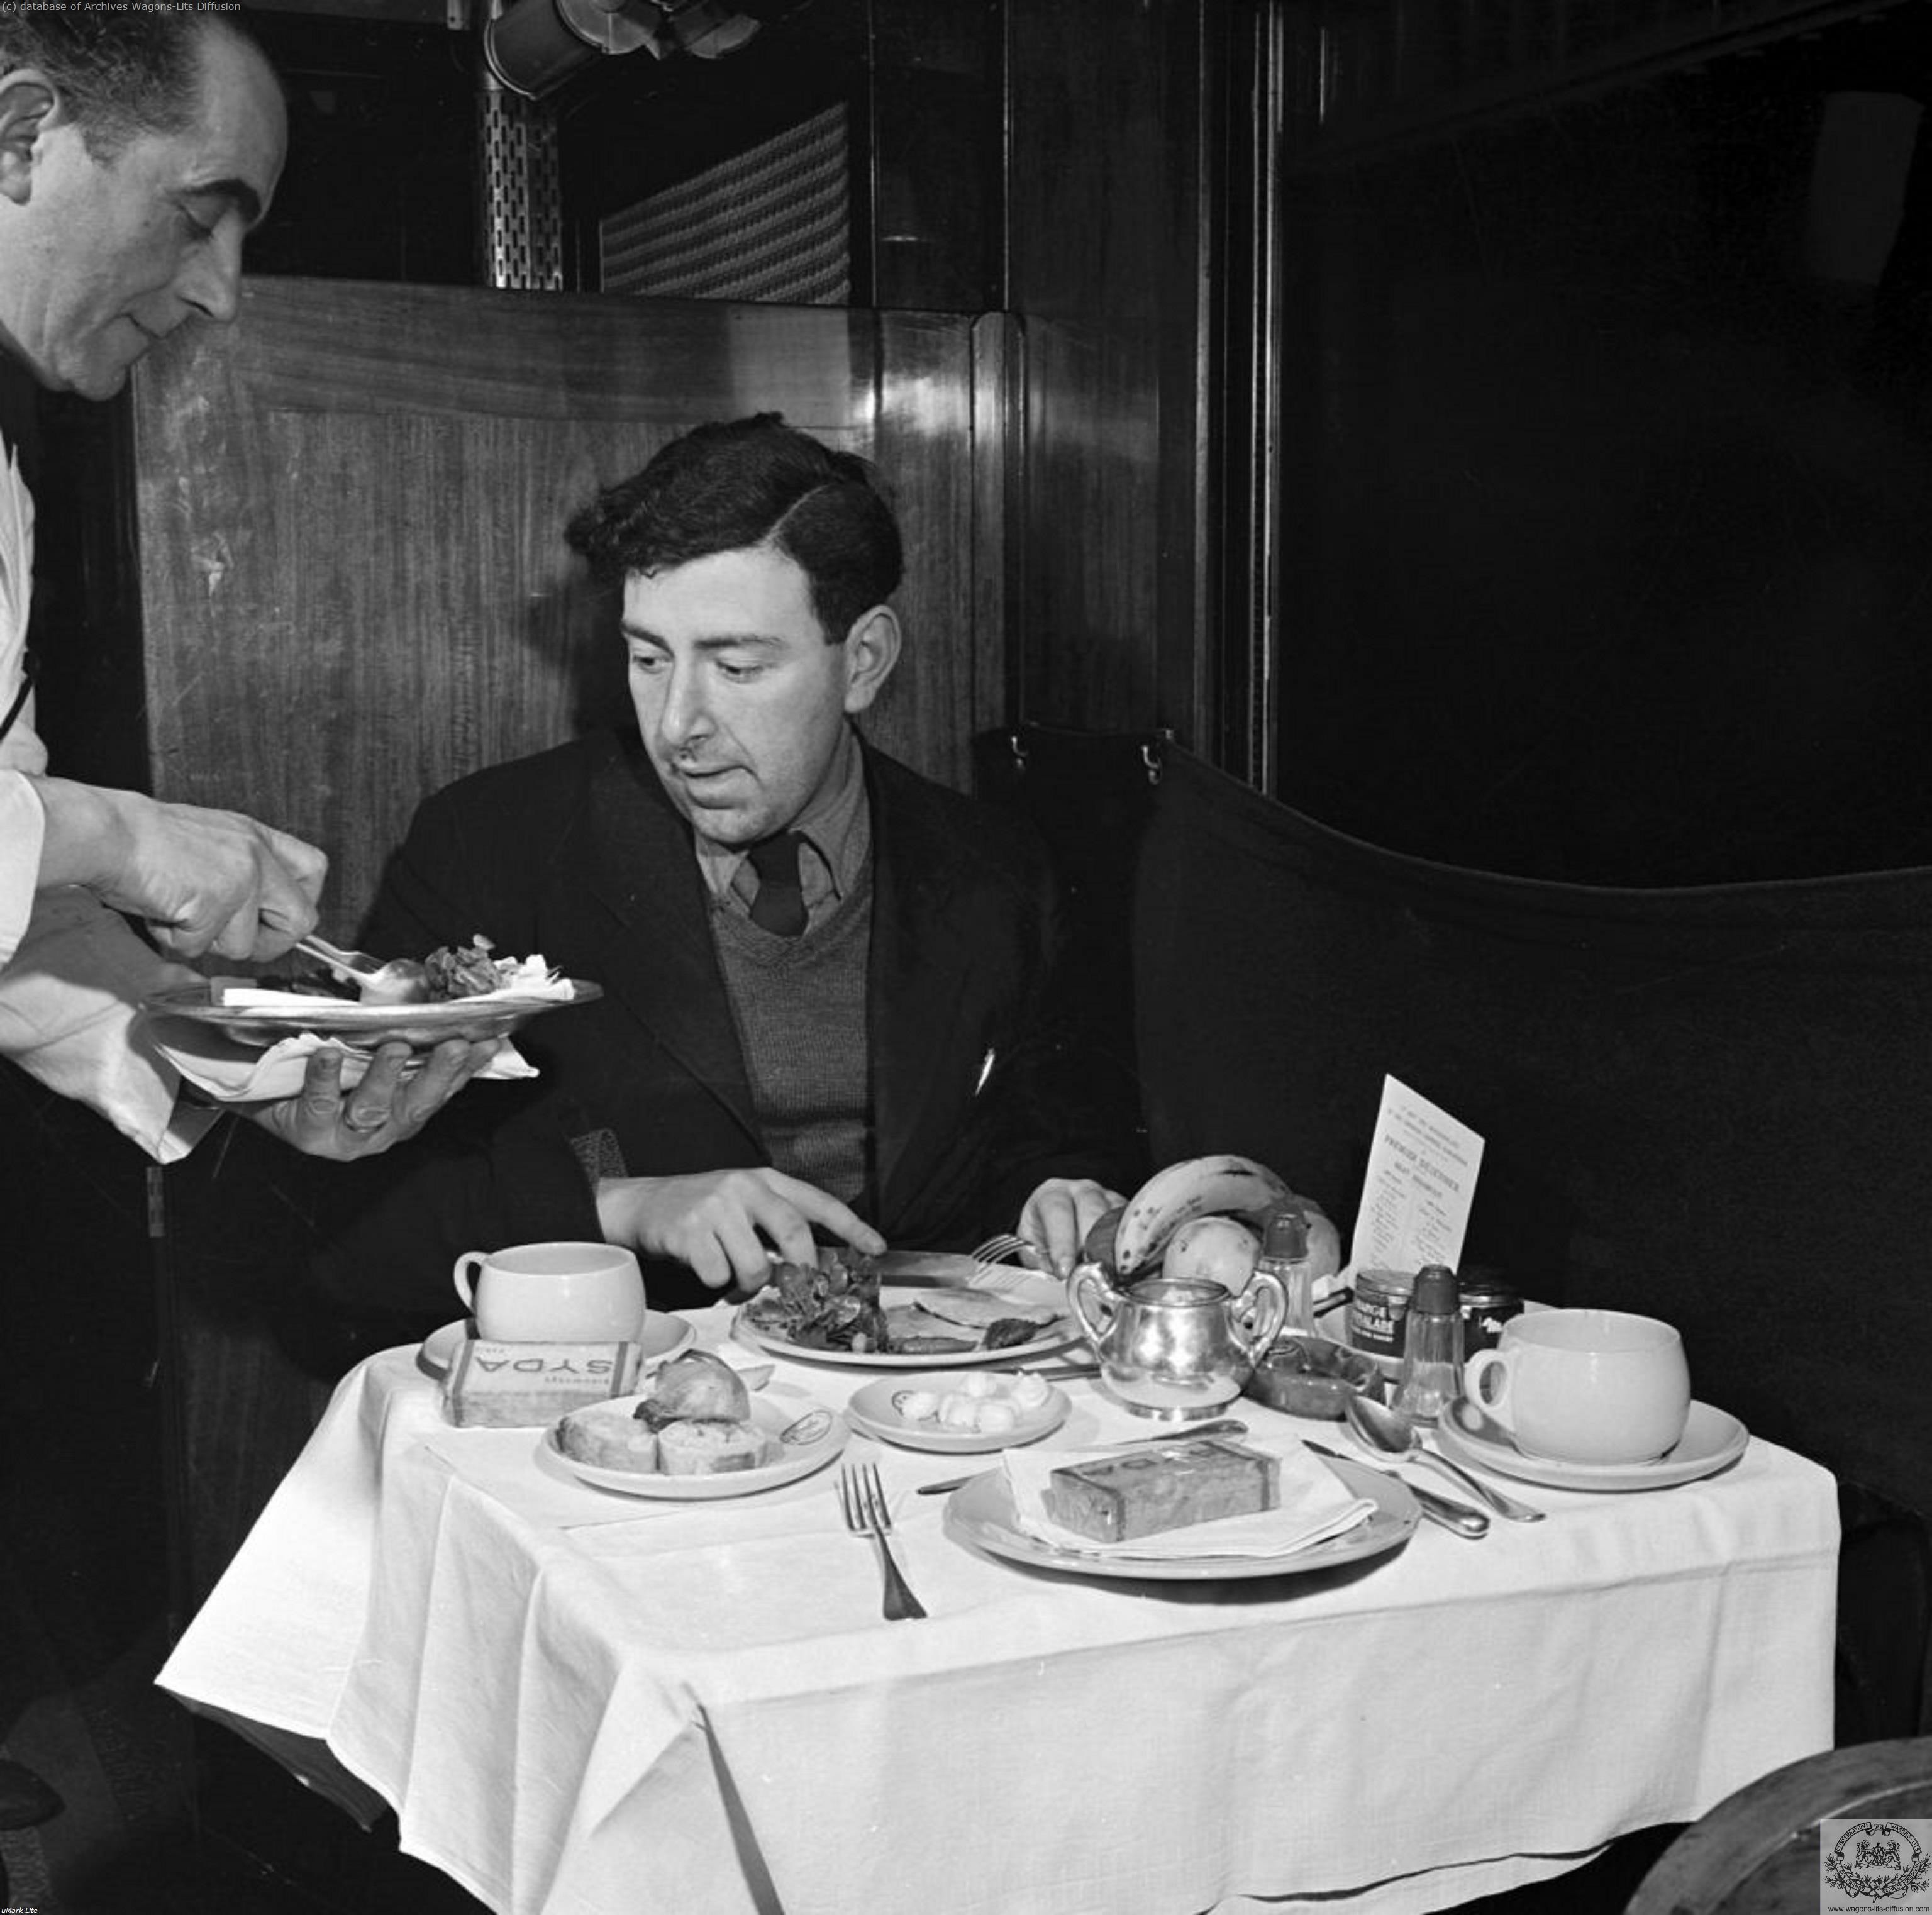 Wl pub night ferry compartment on the london paris sleeper train 1952 4